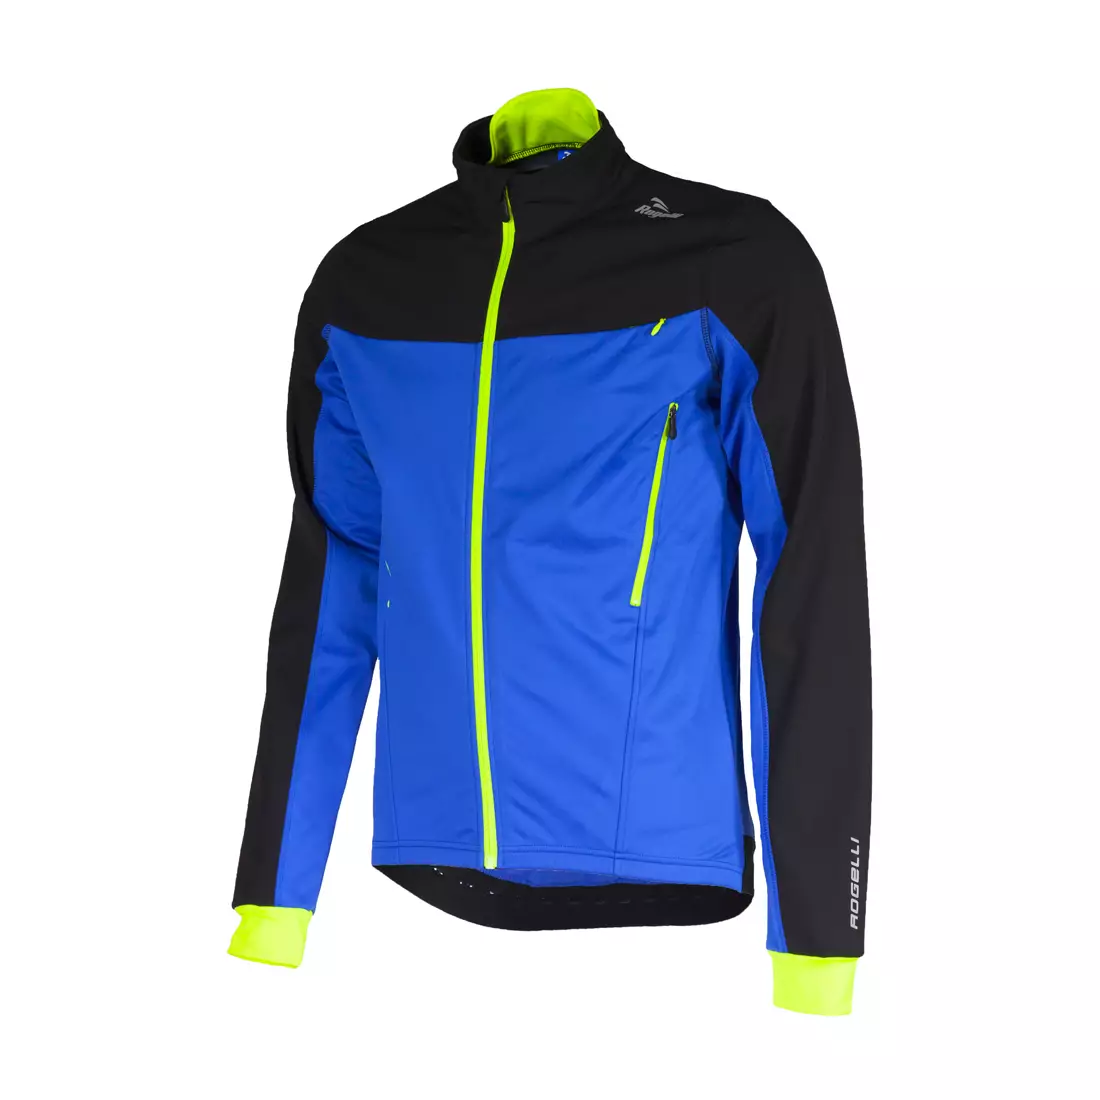 ROGELLI TRABIA zimná cyklistická bunda Softshell, čierno-modro-fluor 003.115